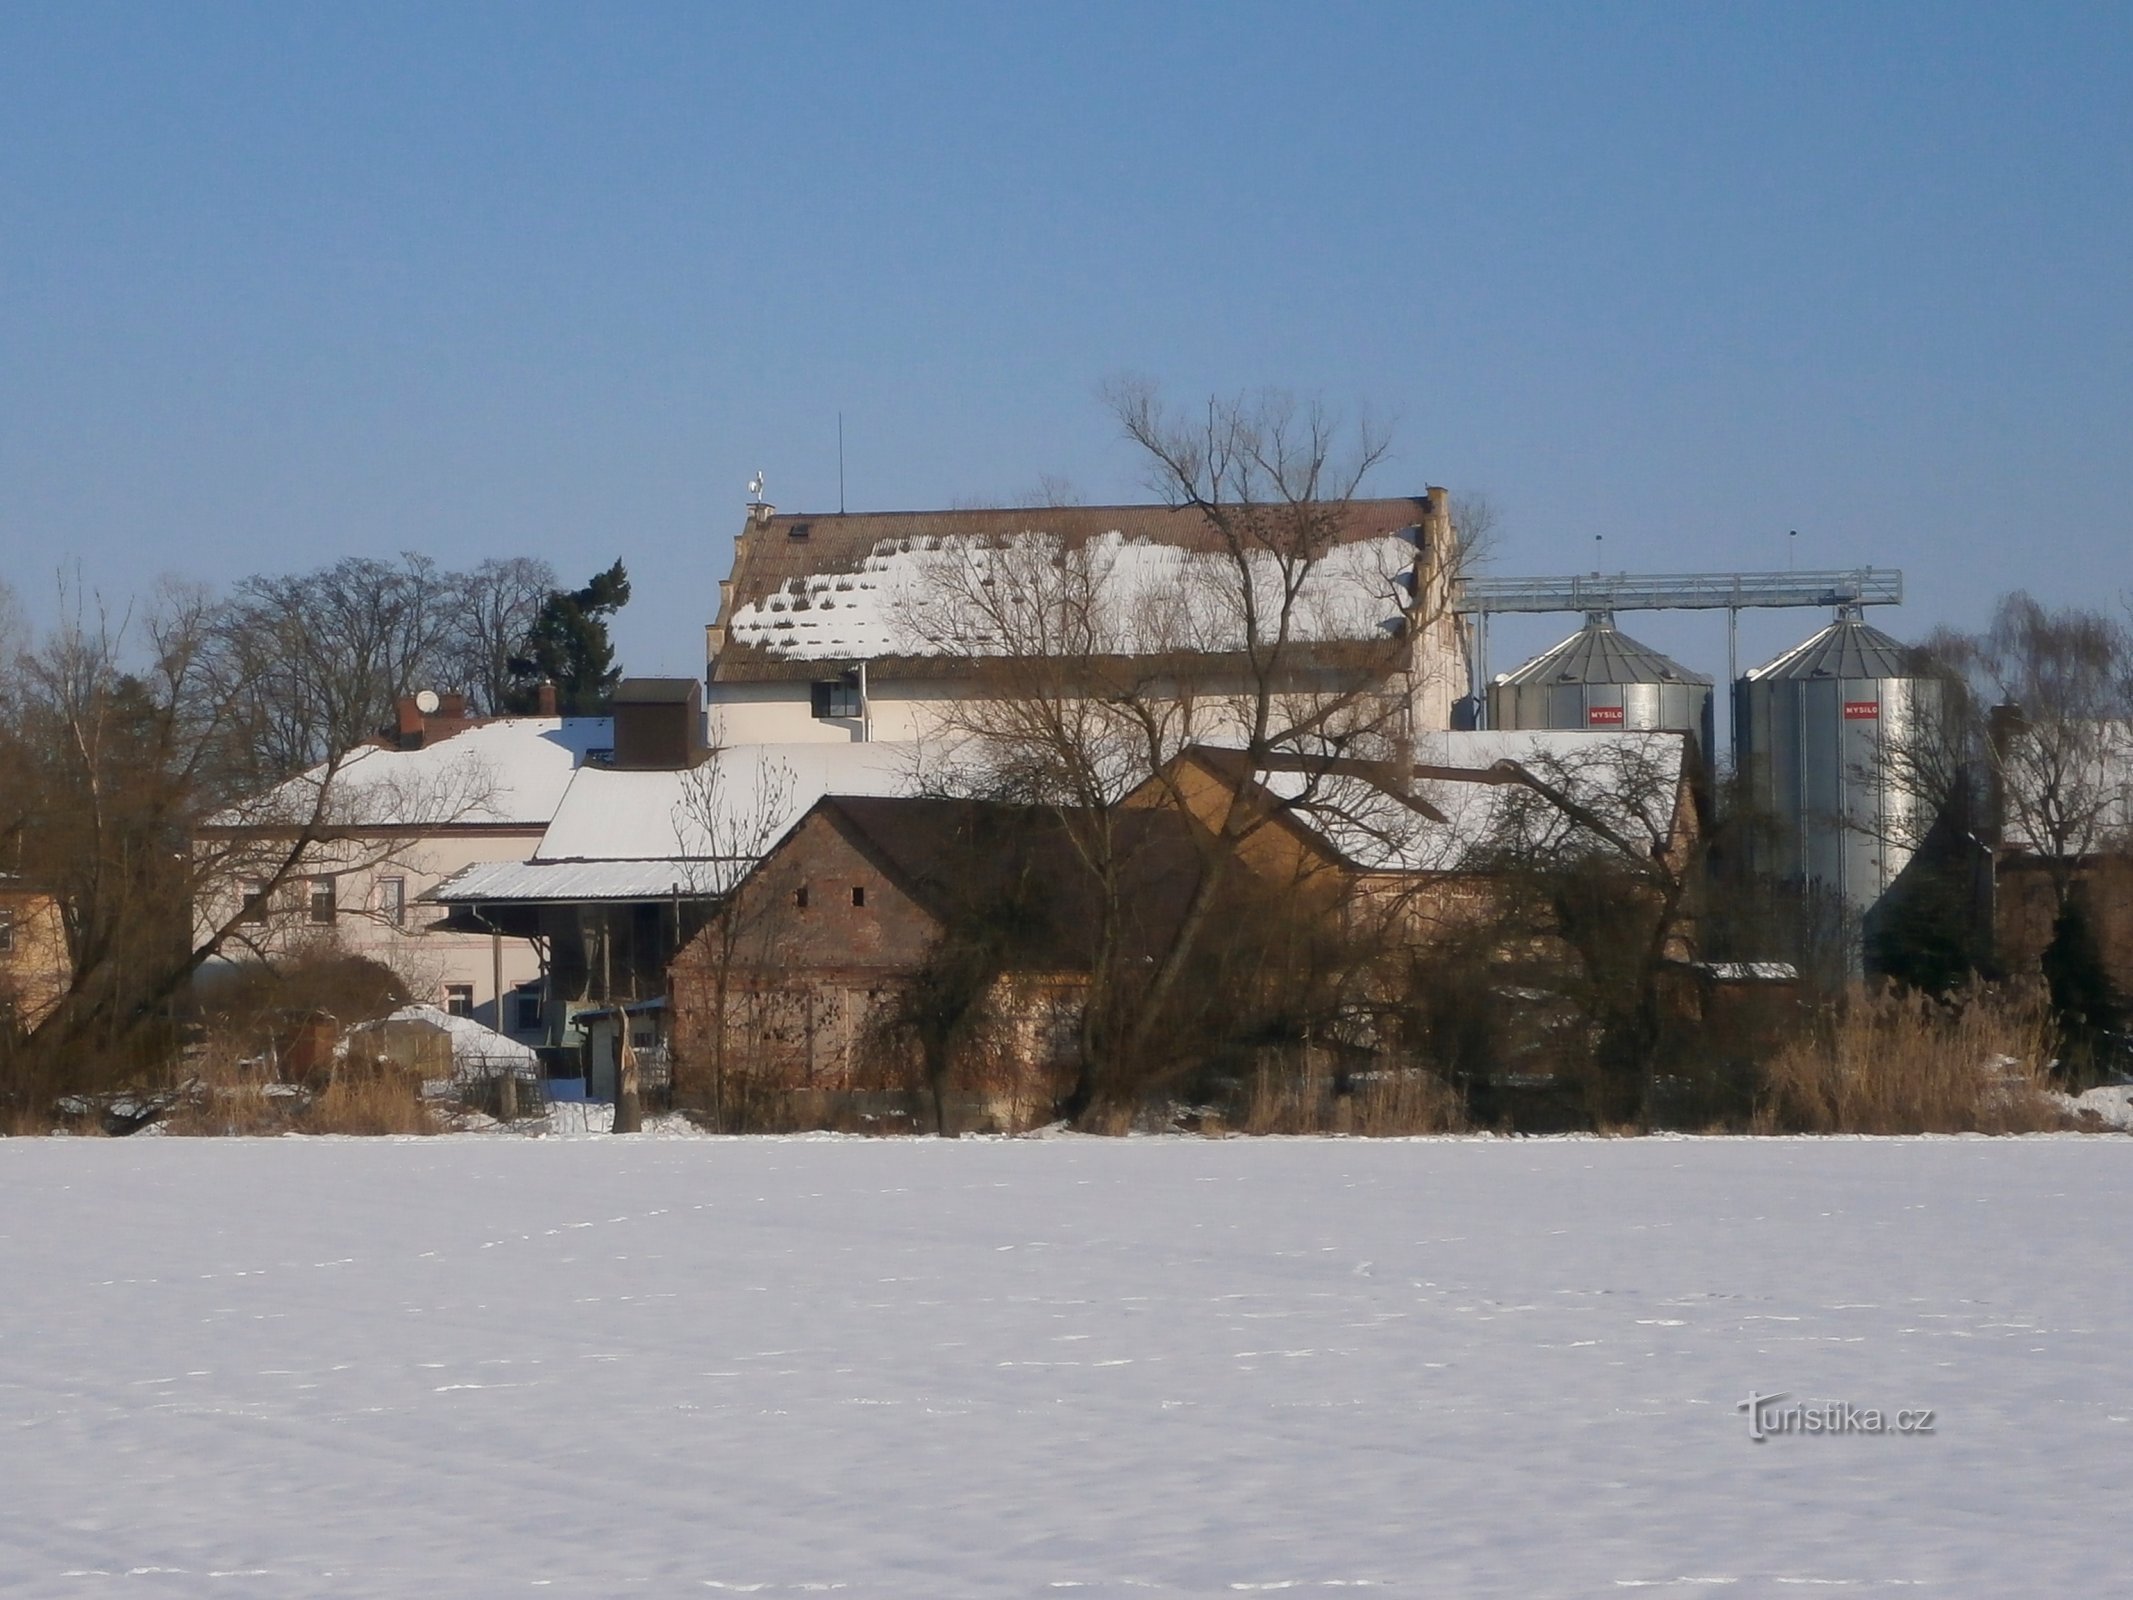 L'ancien moulin de Kydlinov (Hradec Králové)